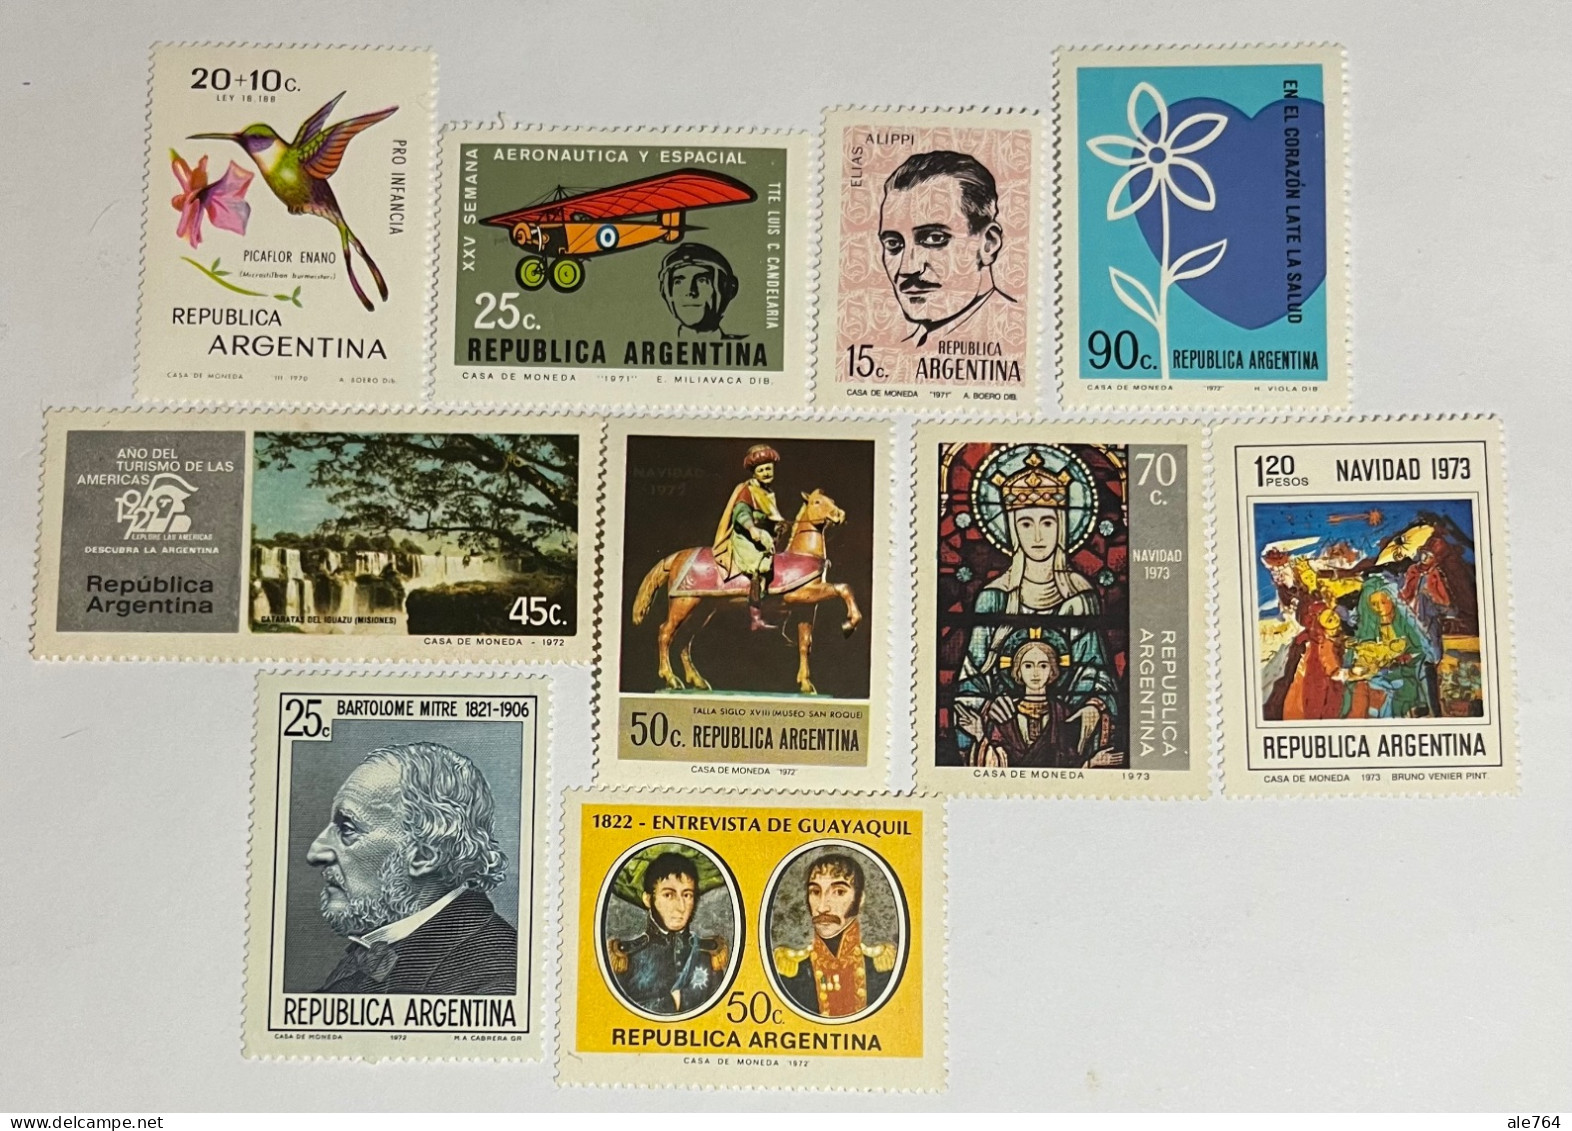 Argentina 1971/3 10 MNH Stamps. - Nuovi